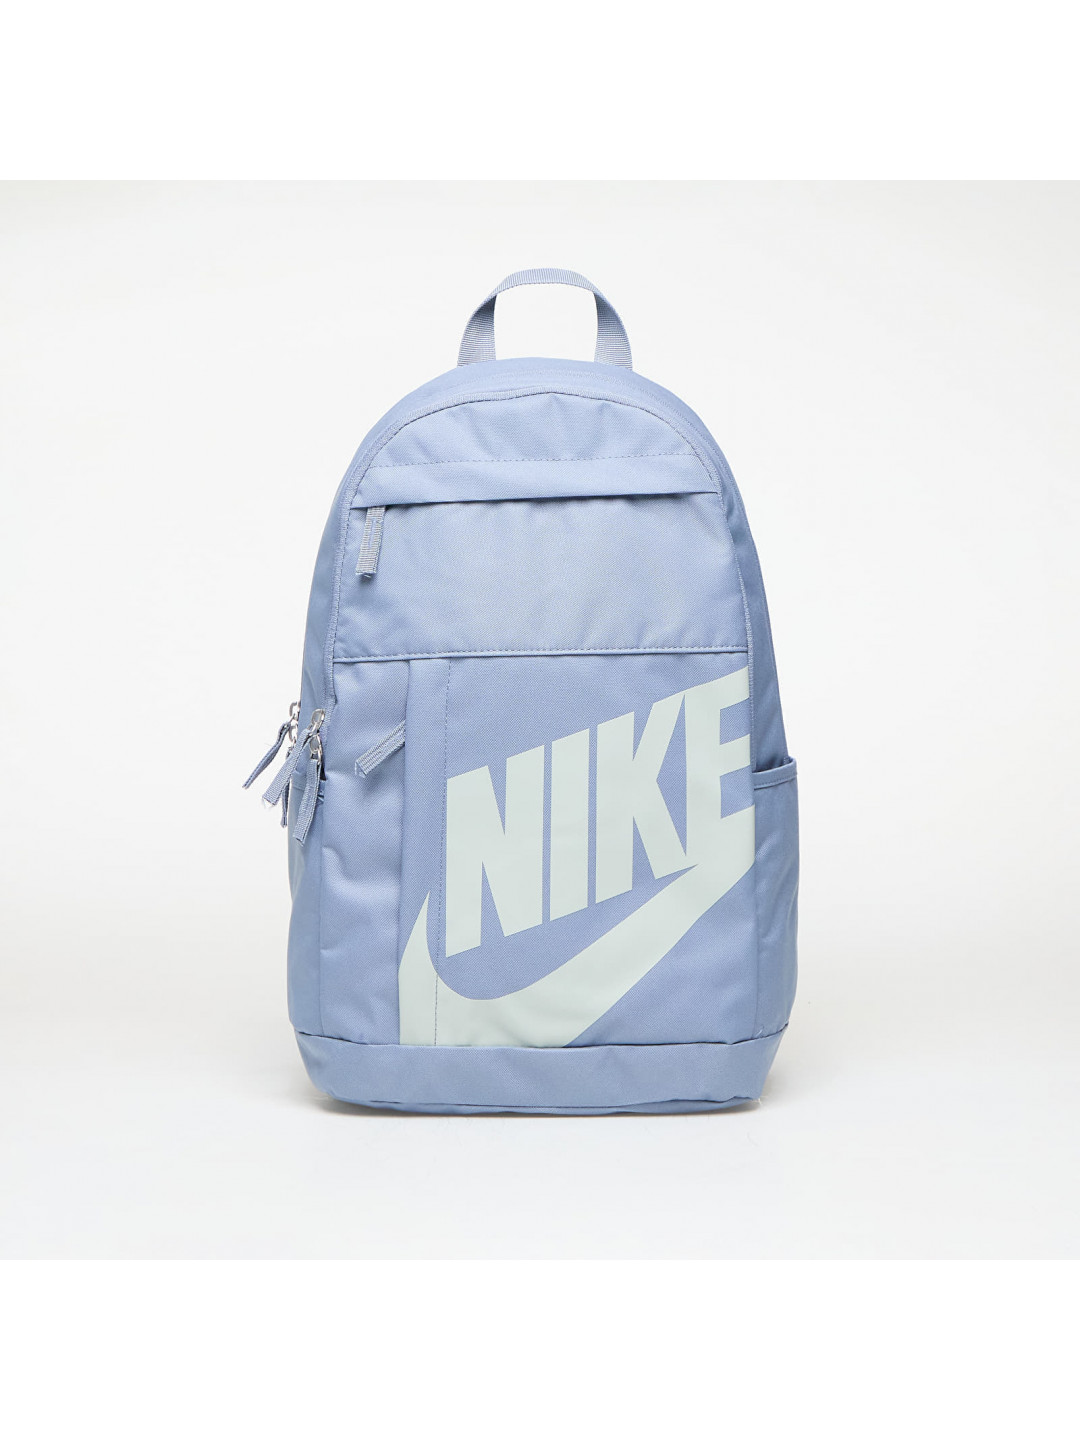 Nike Elemental Backpack Ashen Slate Ashen Slate Light Silver